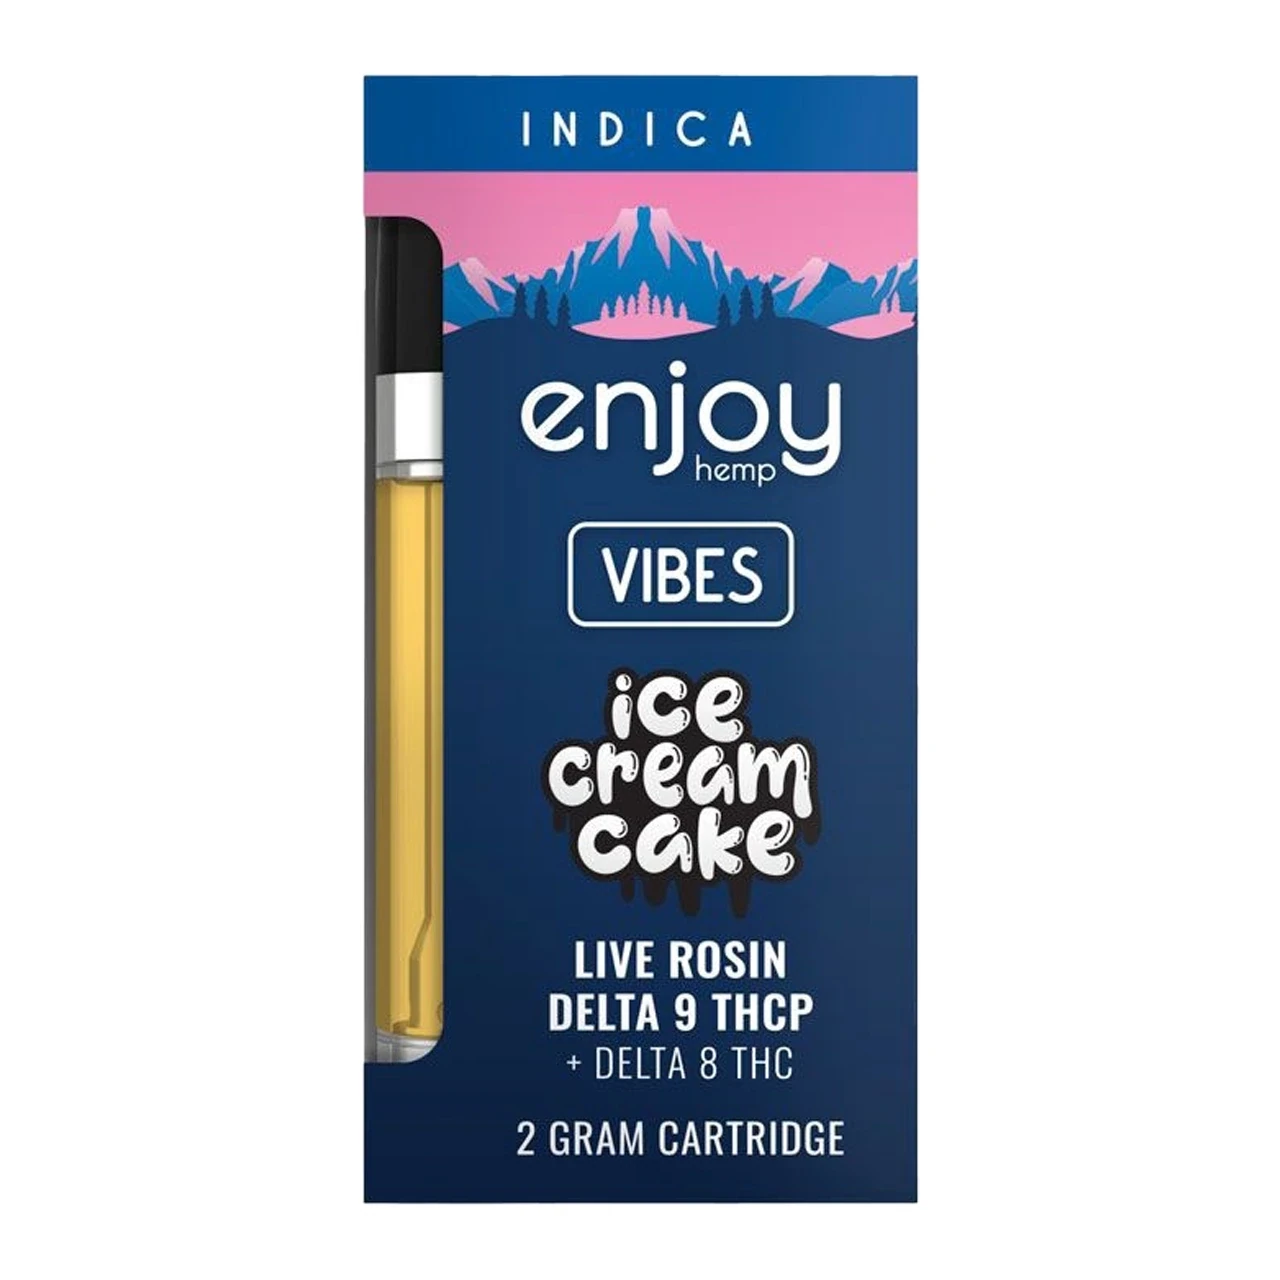 Enjoy: Vibes Delta 9 THCp + Delta 8 THC Live Rosin Ice Cream Cake Vape Cartridge